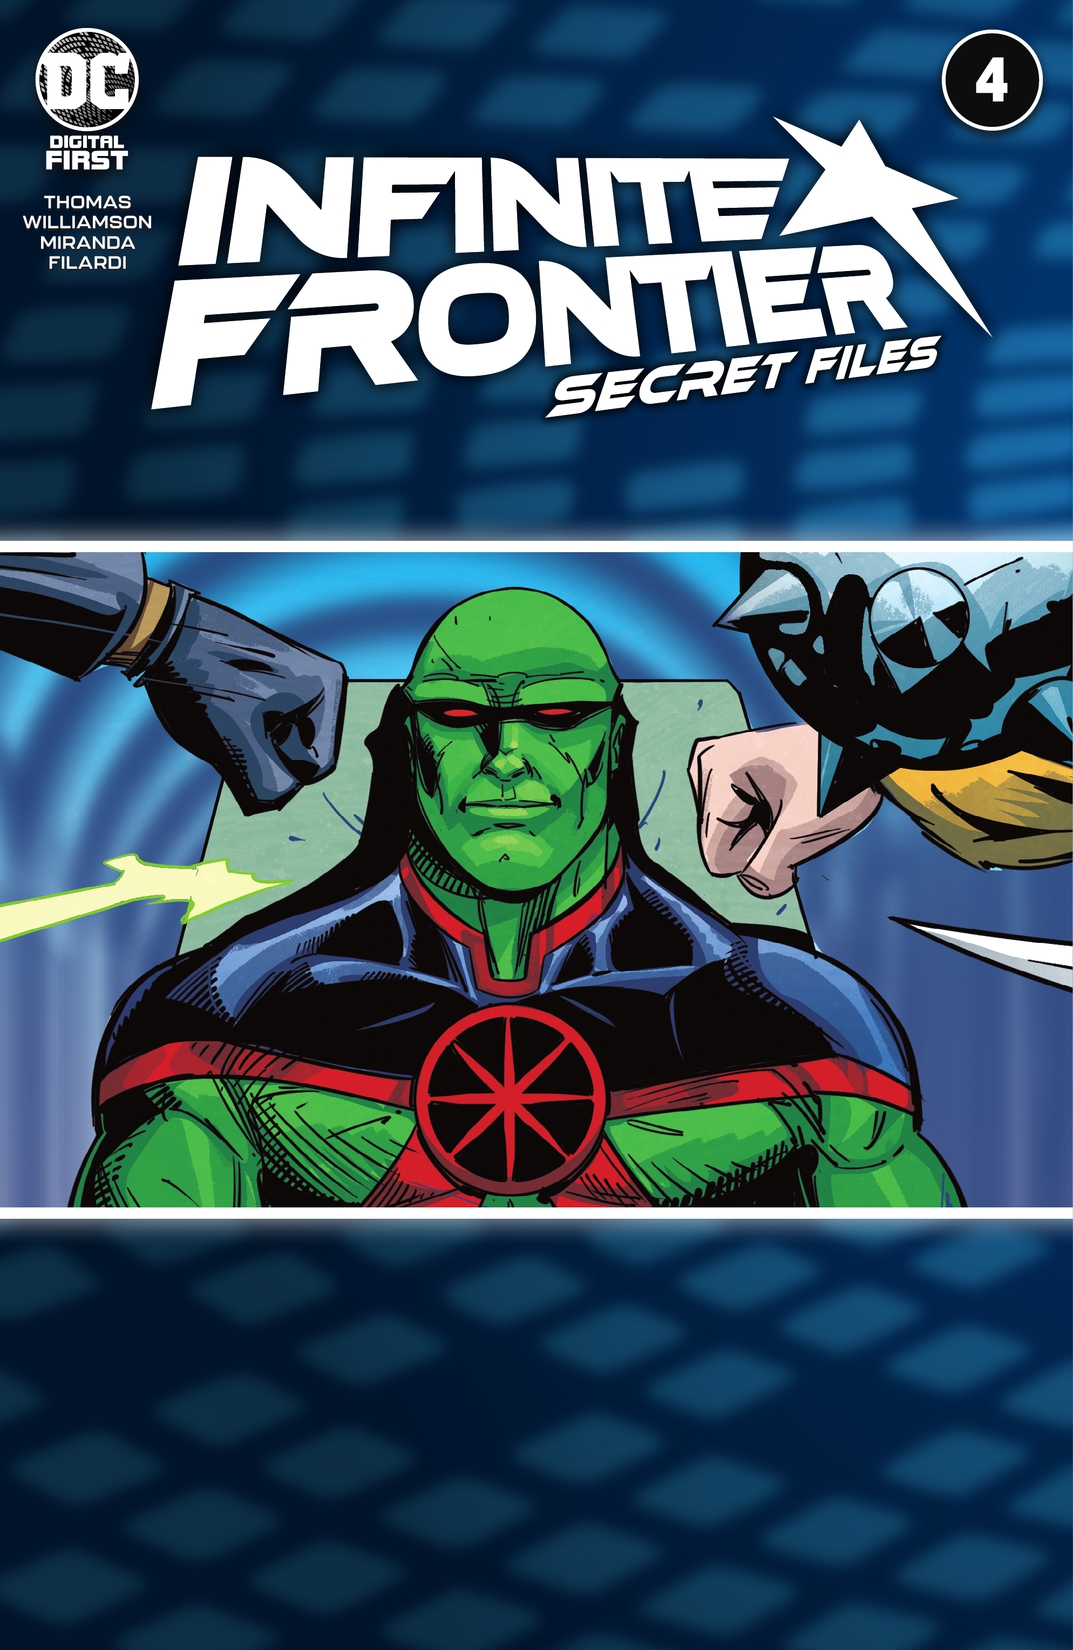 Infinite Frontier: Secret Files #4 preview images